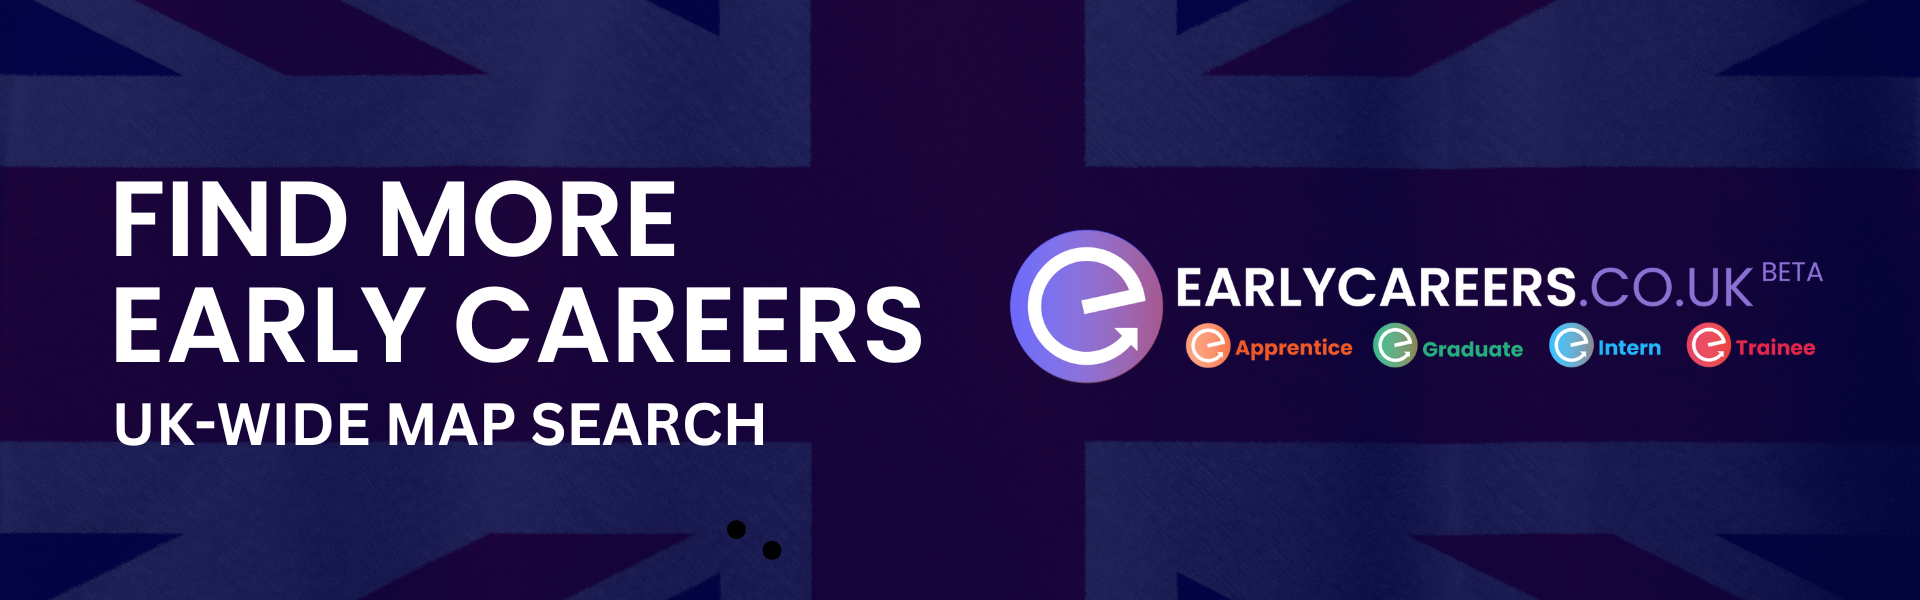 EarlyCareers.co.uk Banner